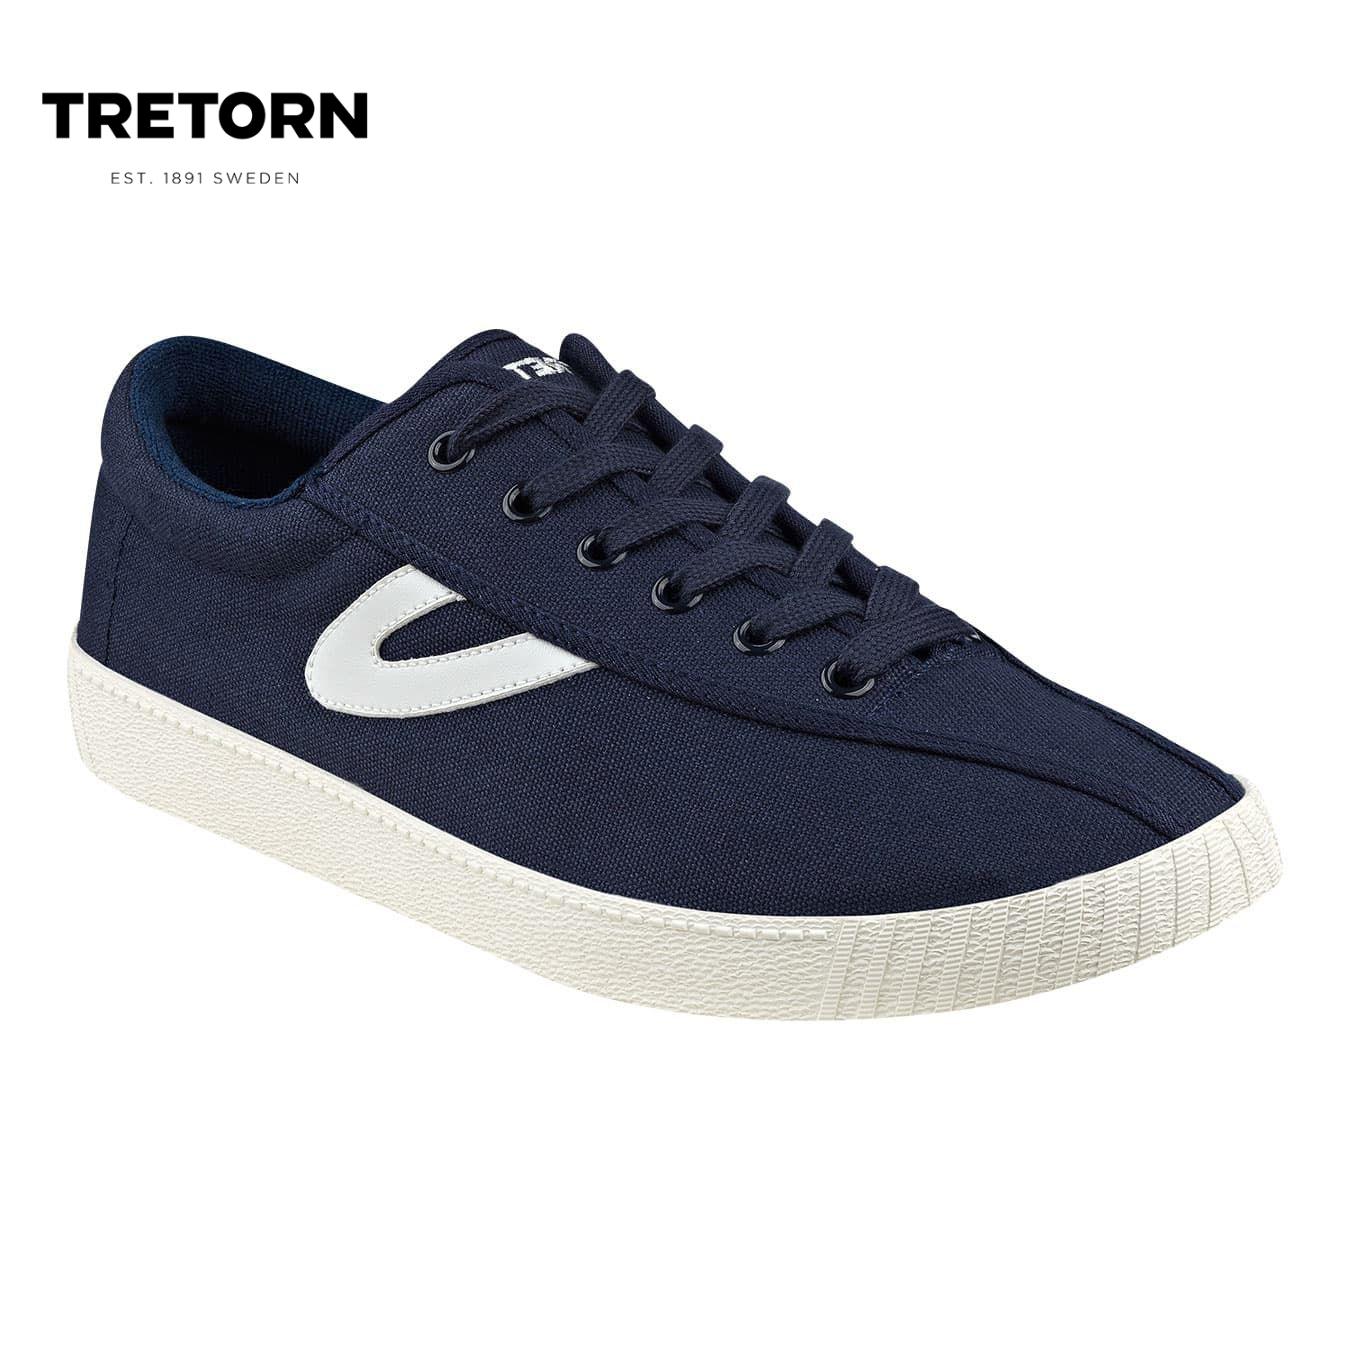 Buy Tretorn Sneakers Online | lazada.com.ph